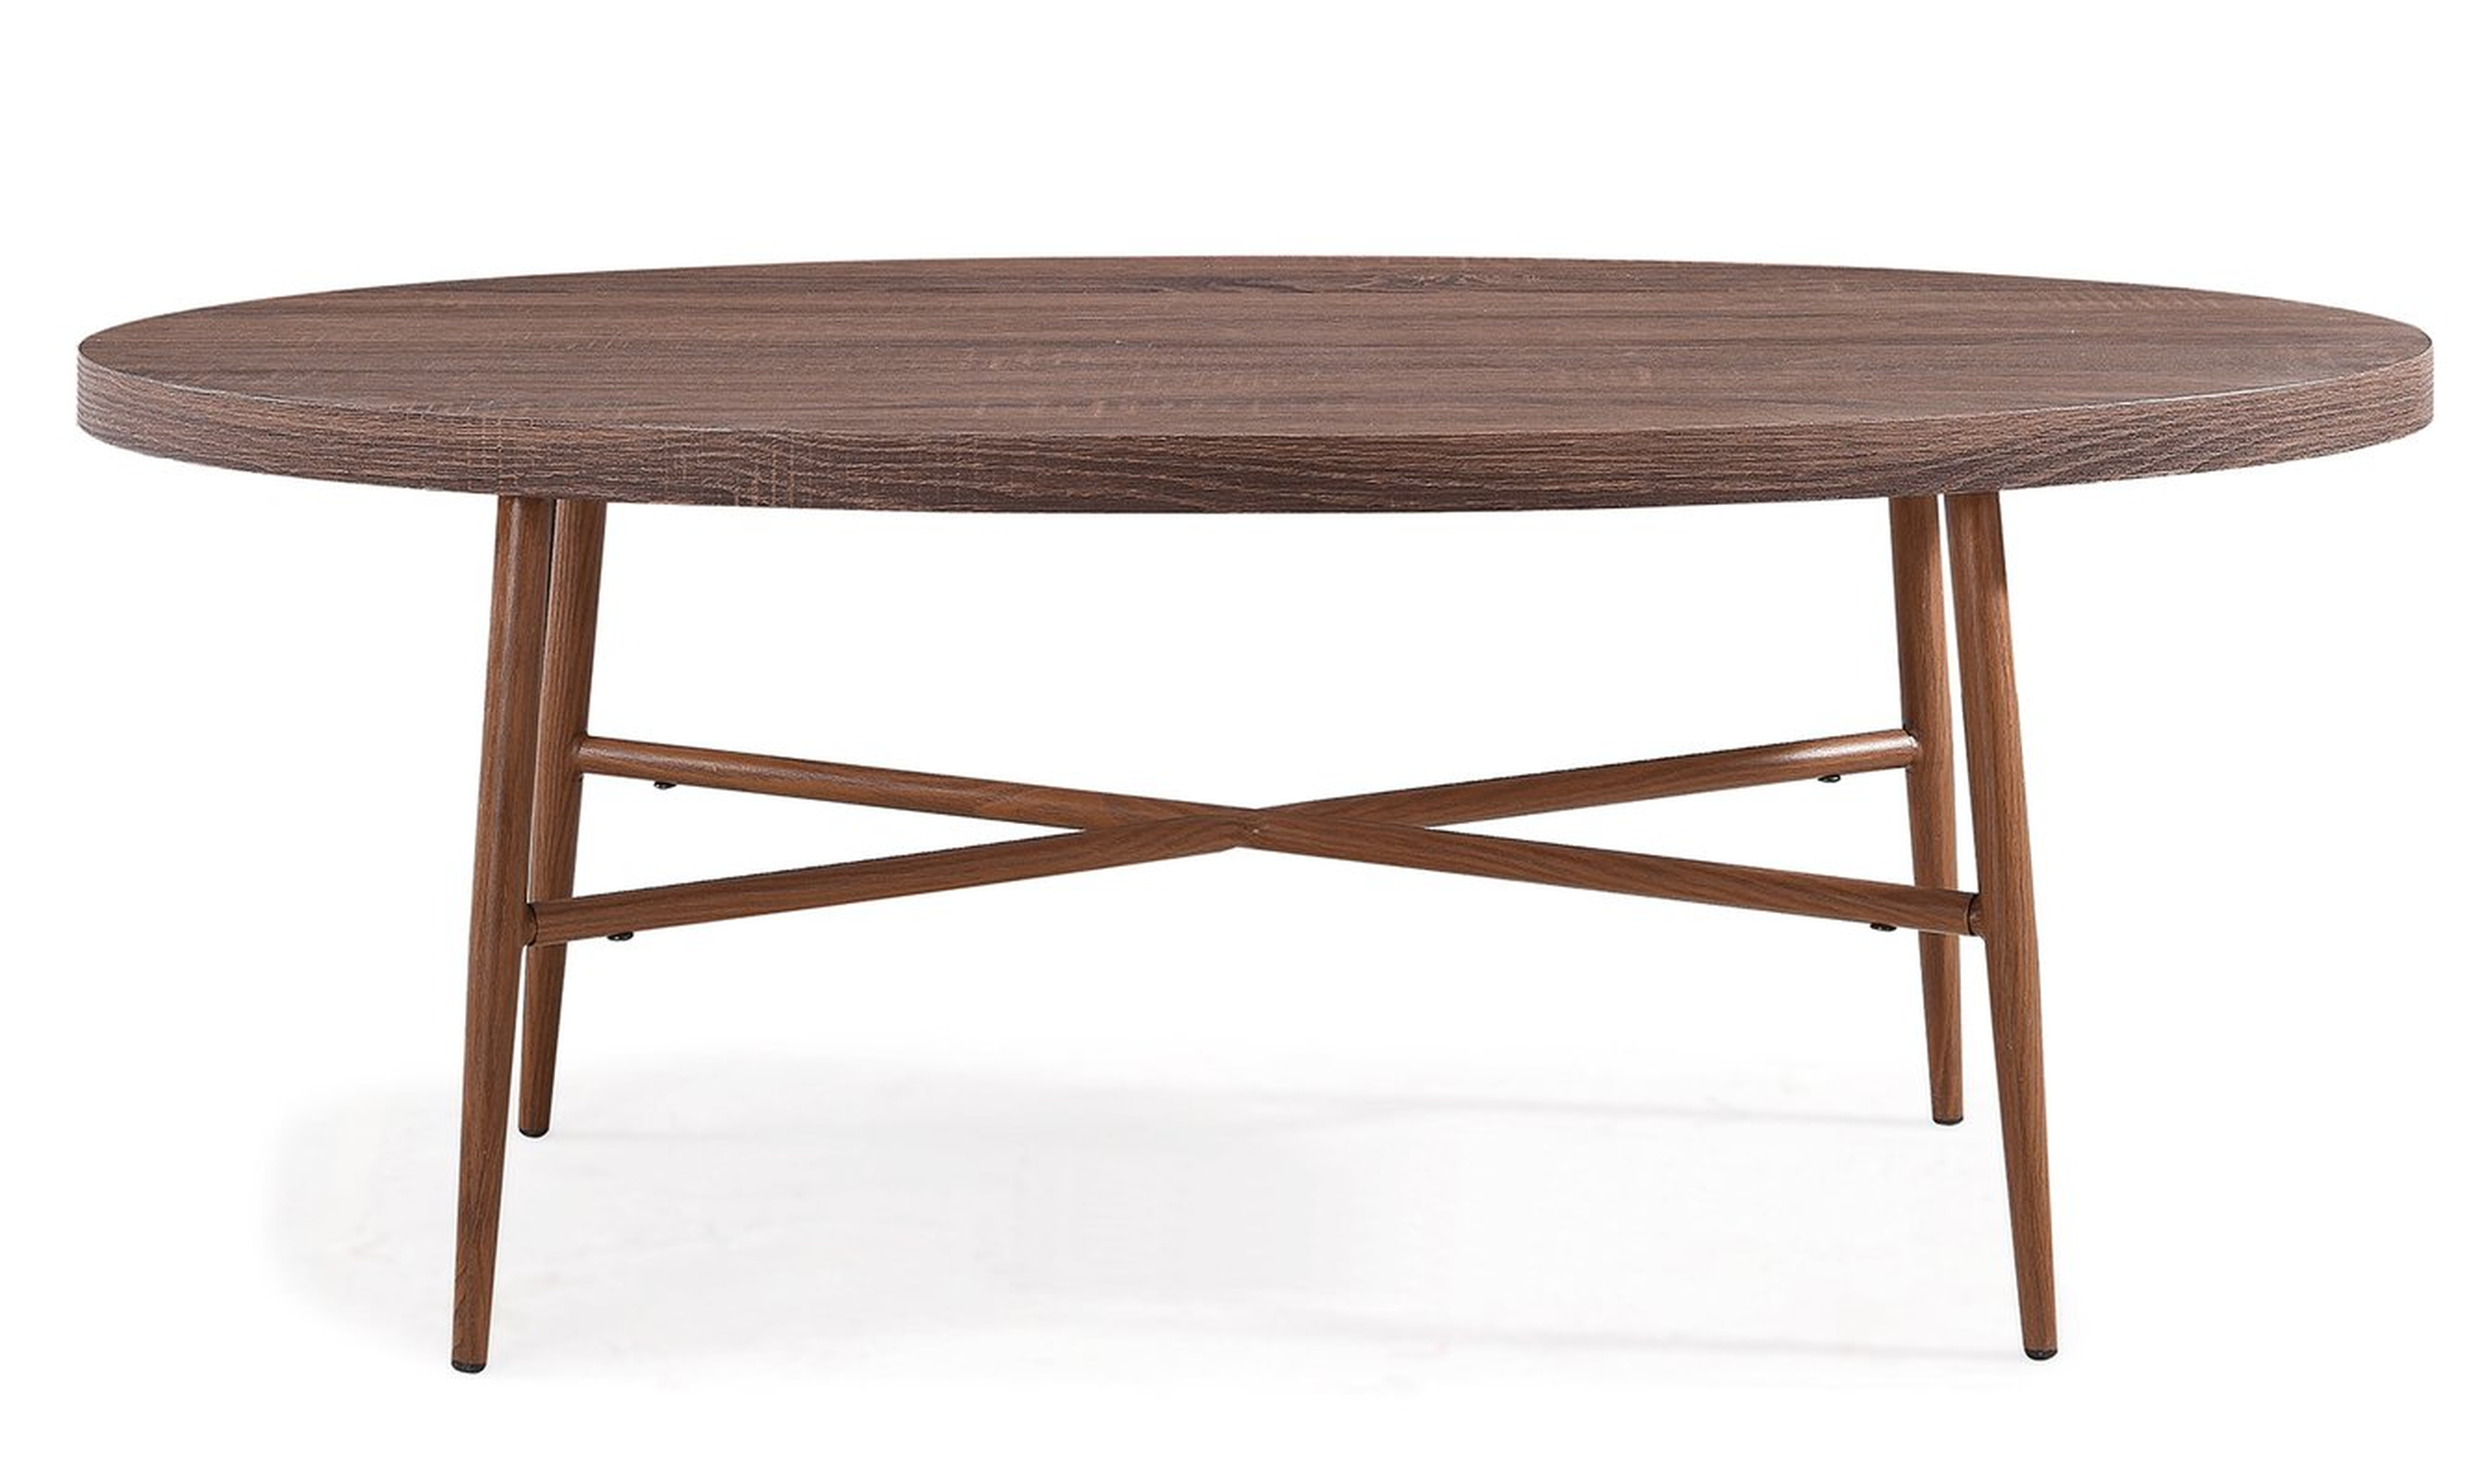 Umstead Oval Coffee Table - Wayfair